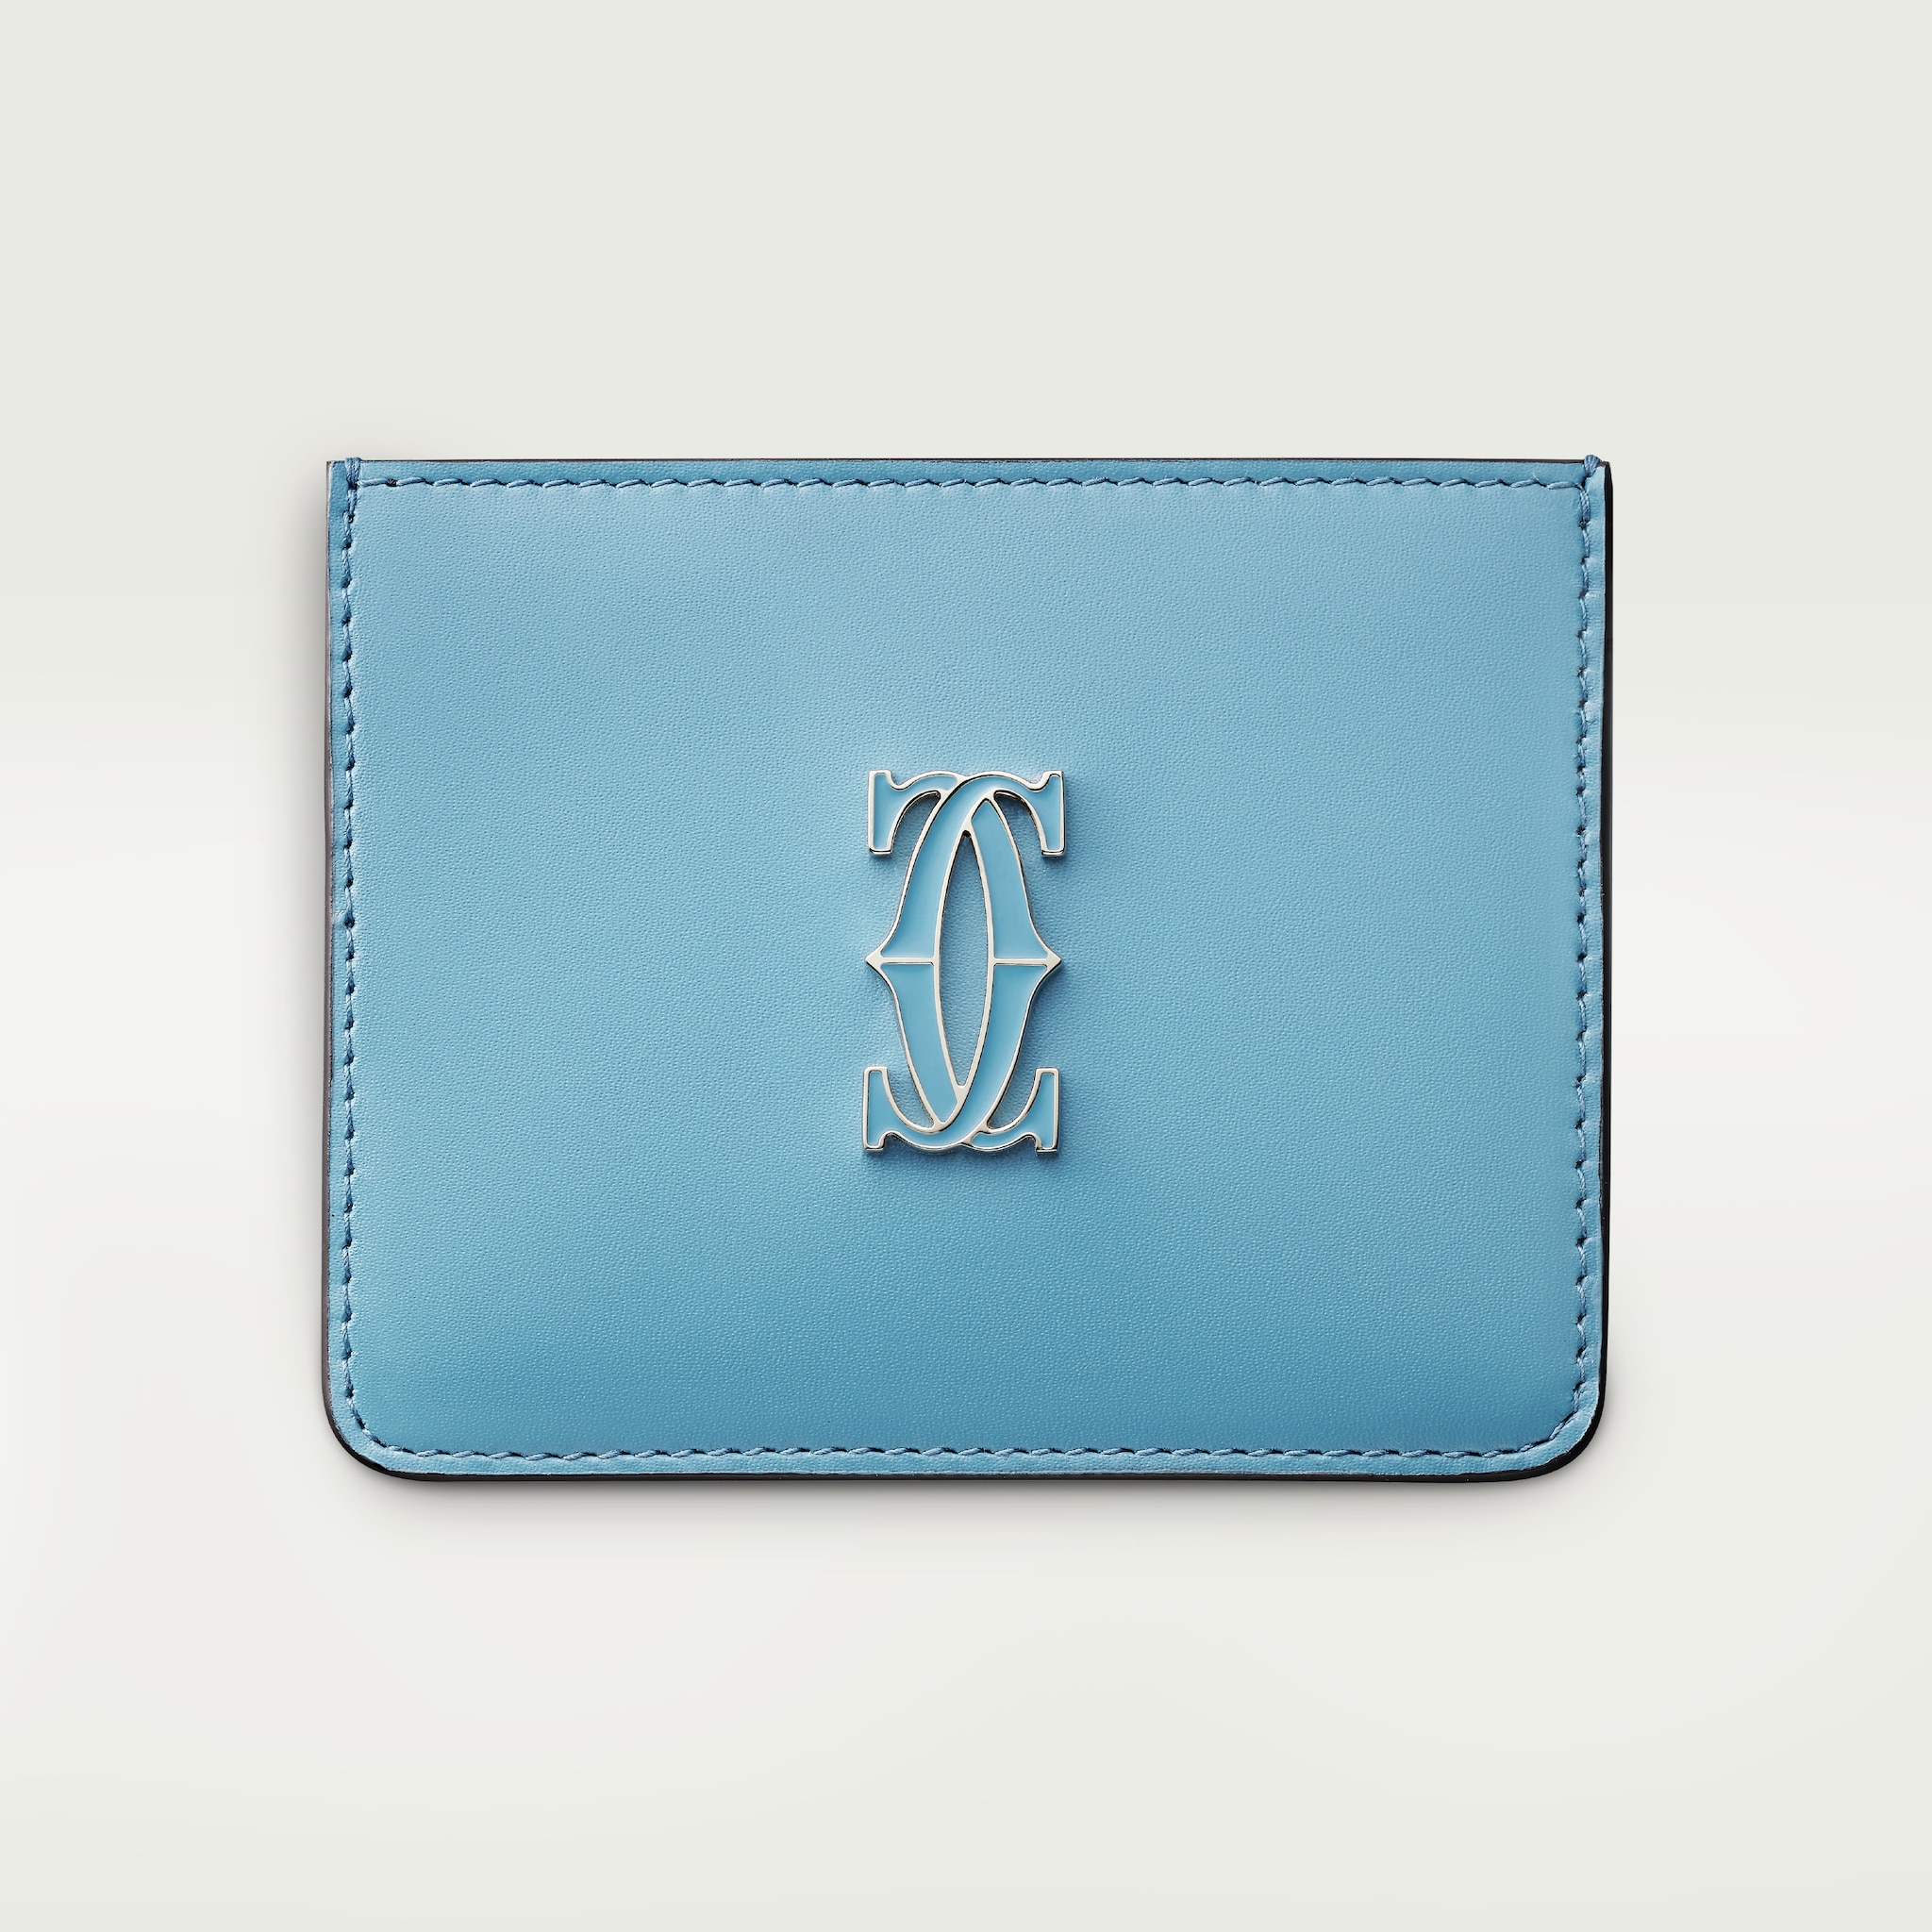 Simple Card Holder, C de CartierCapri blue calfskin, golden and Capri blue enamel-finish